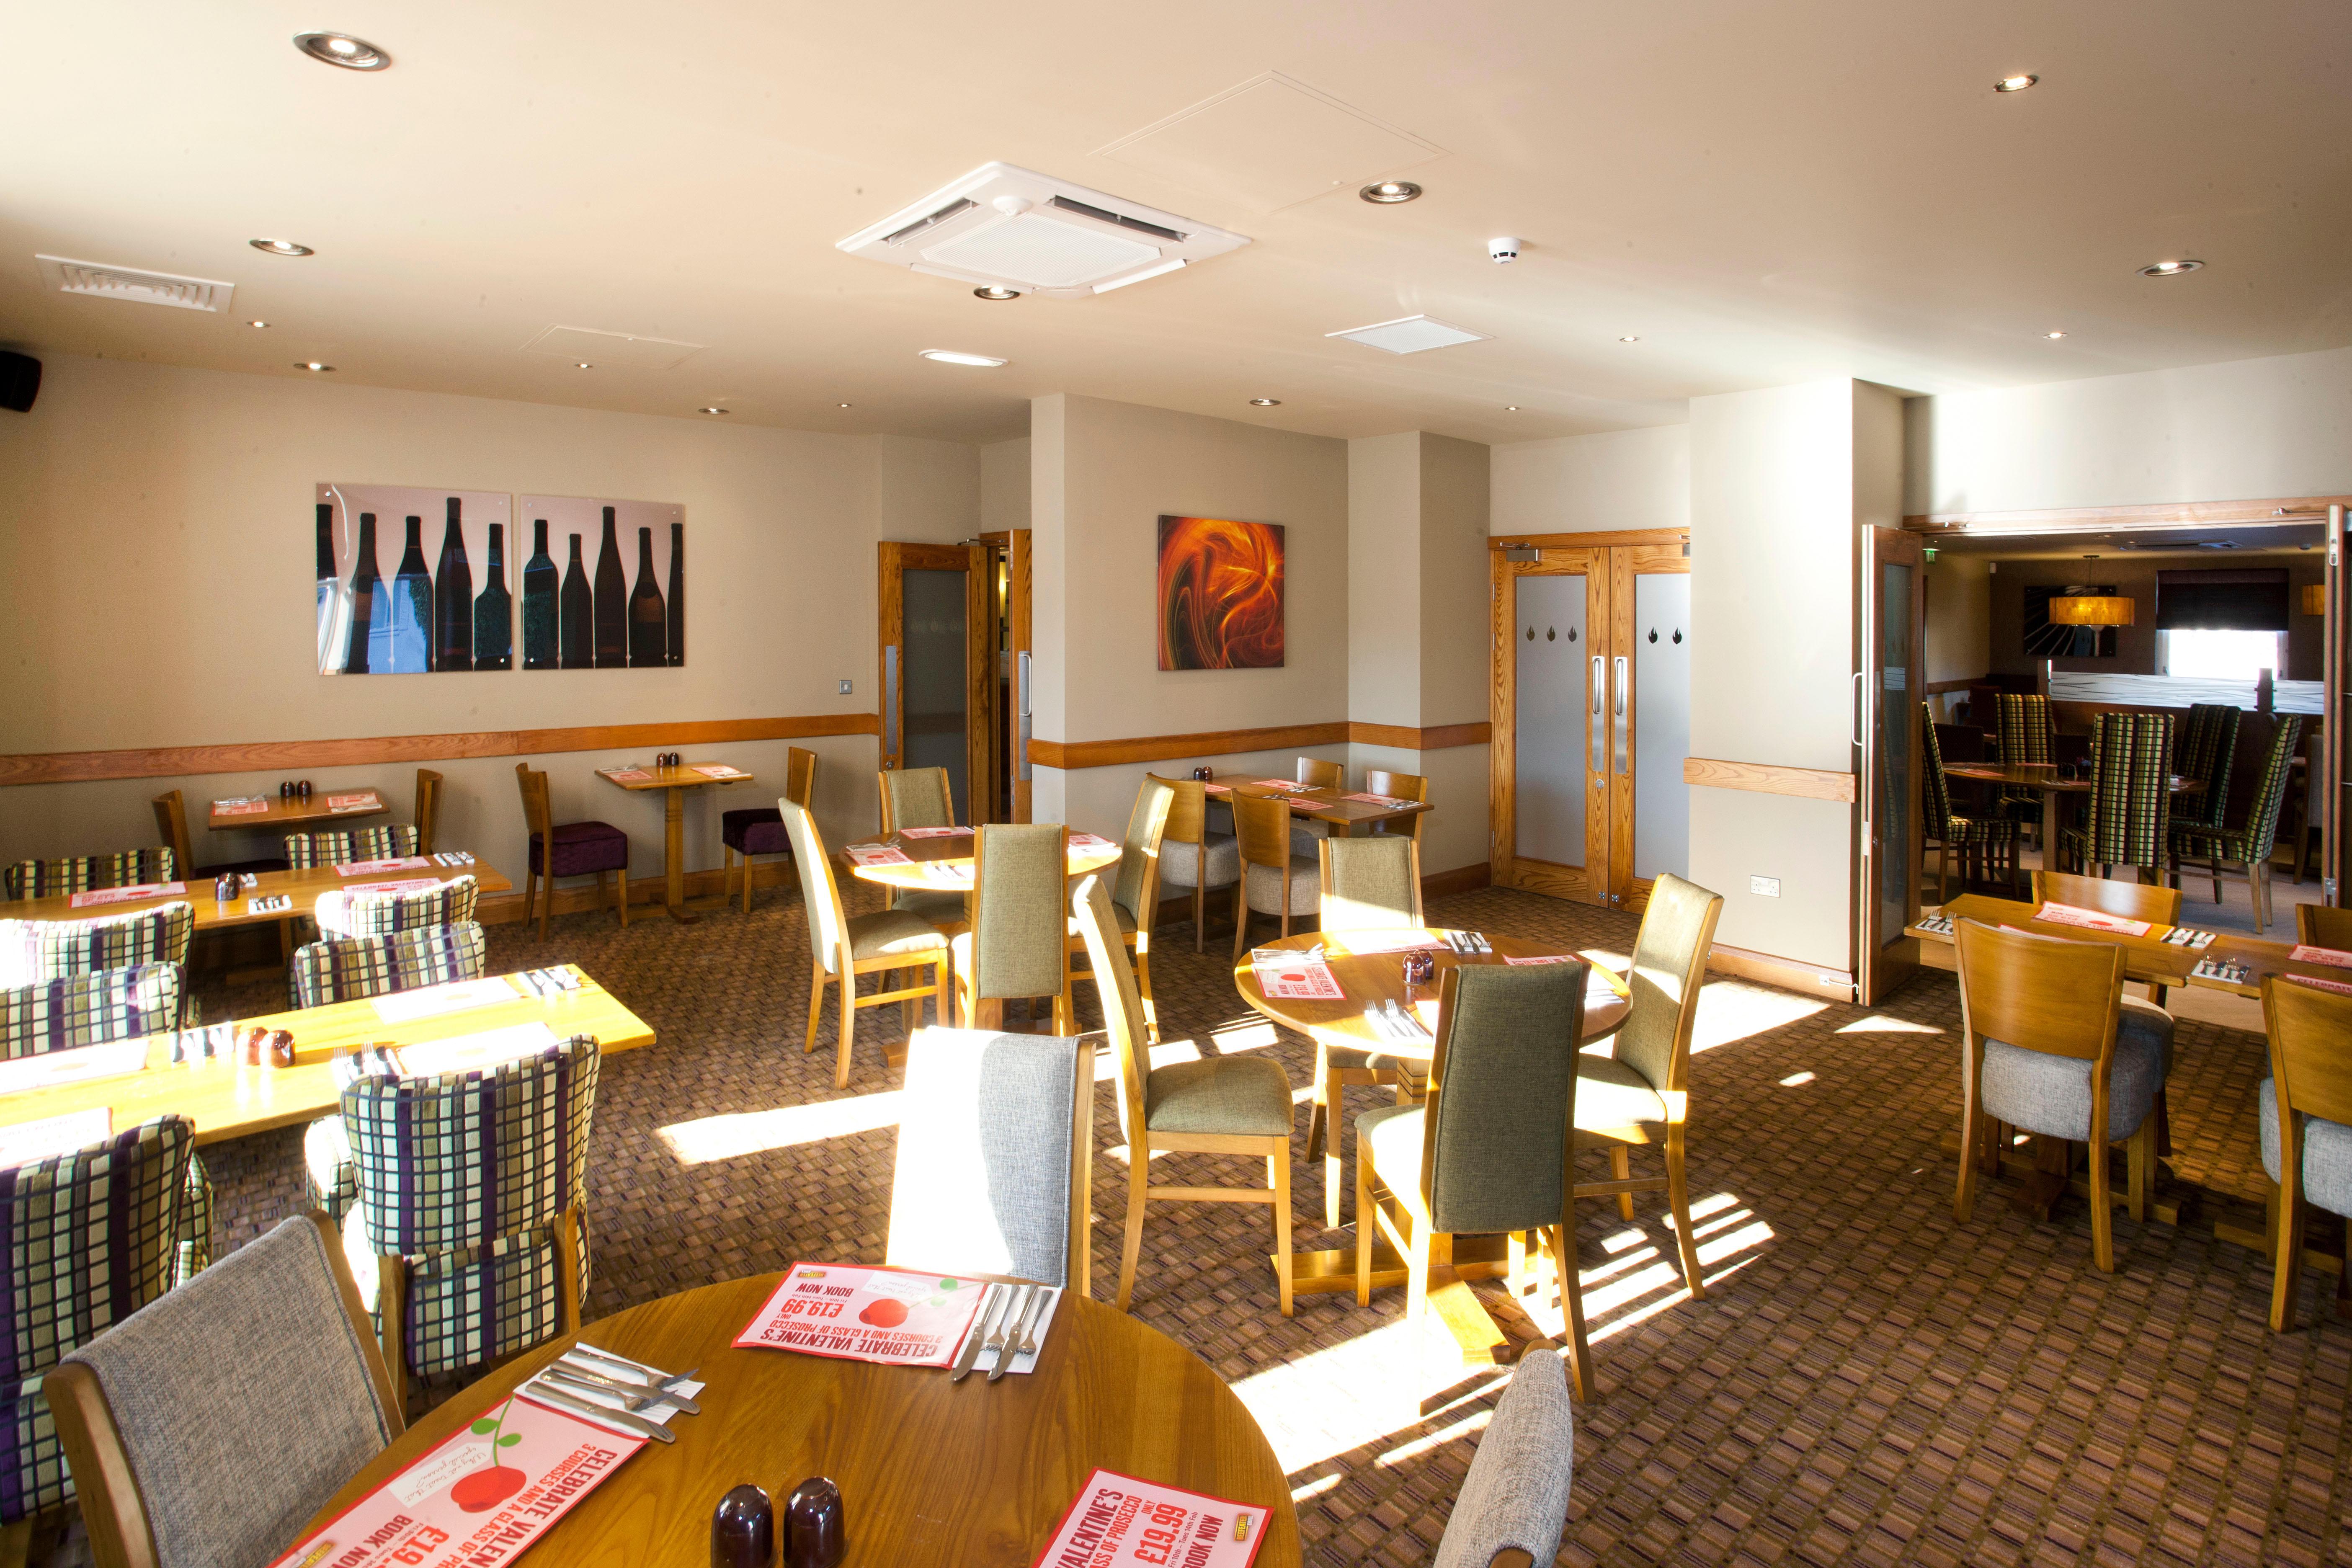 Beefeater restaurant Premier Inn Inverness West hotel Inverness 03333 219256